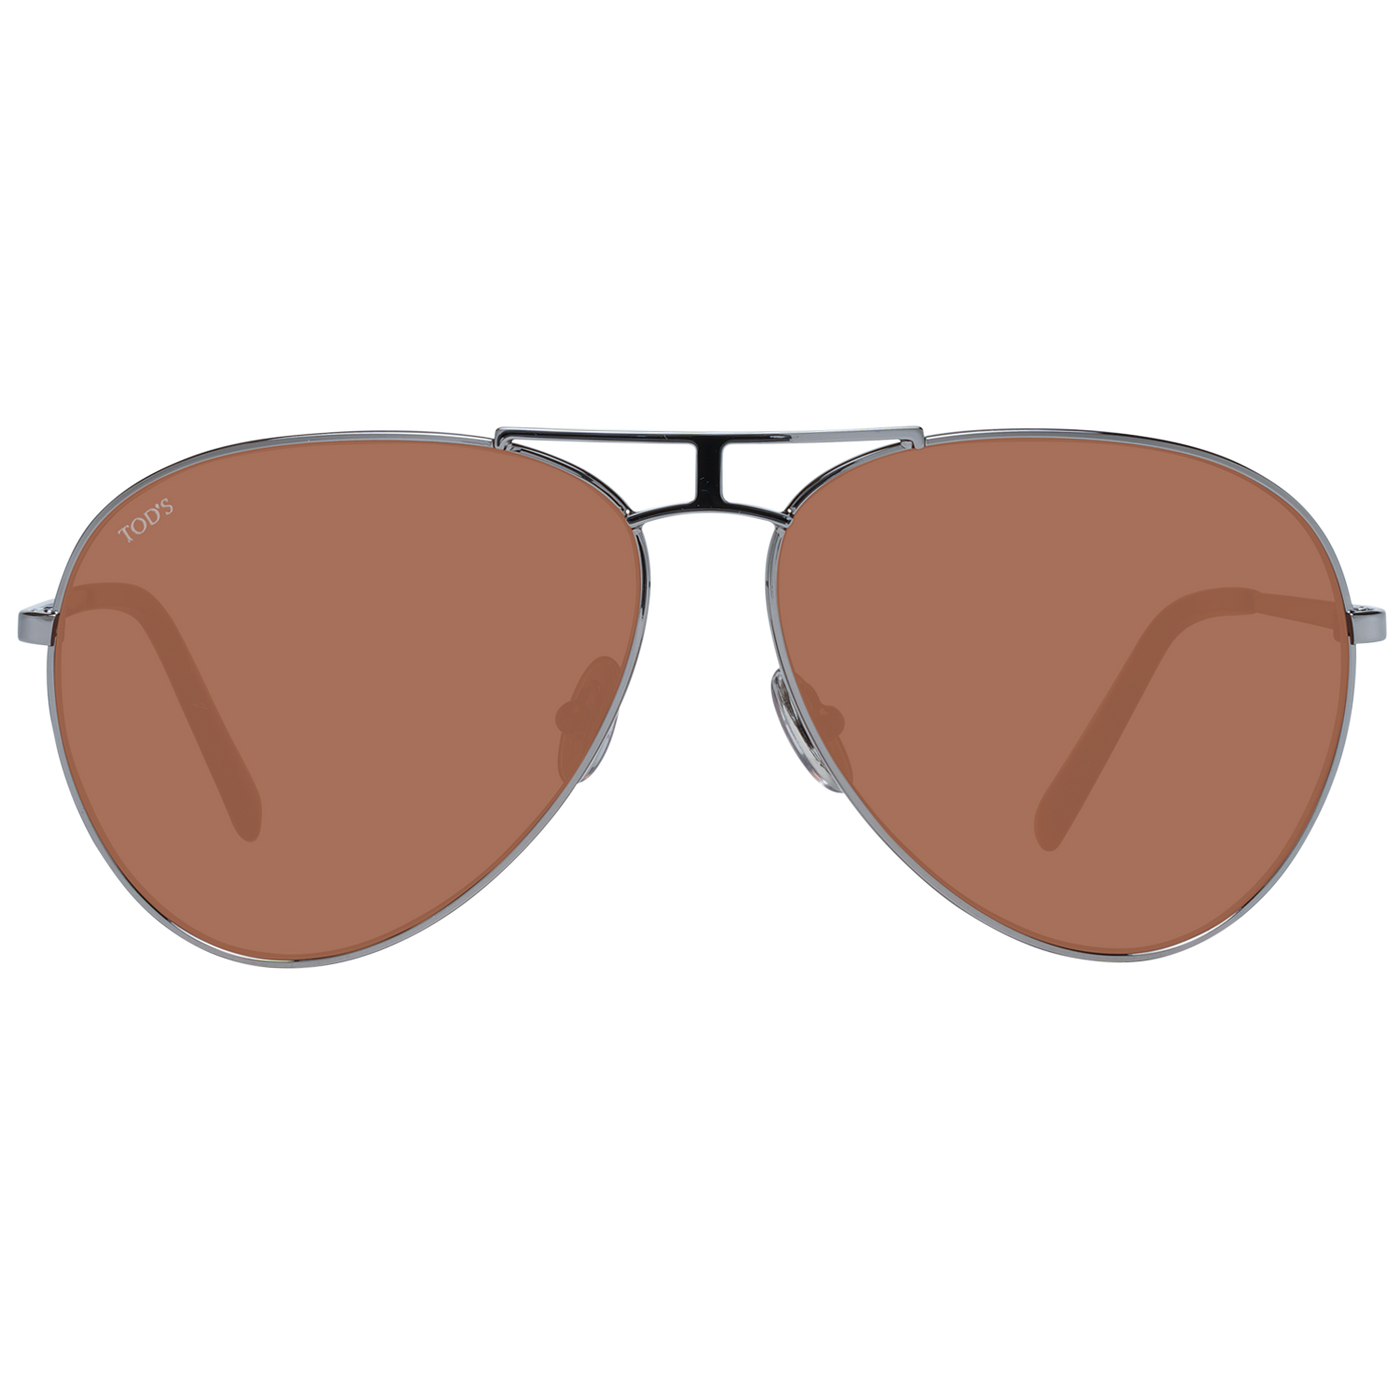 Tod's Gray Unisex Sunglasses